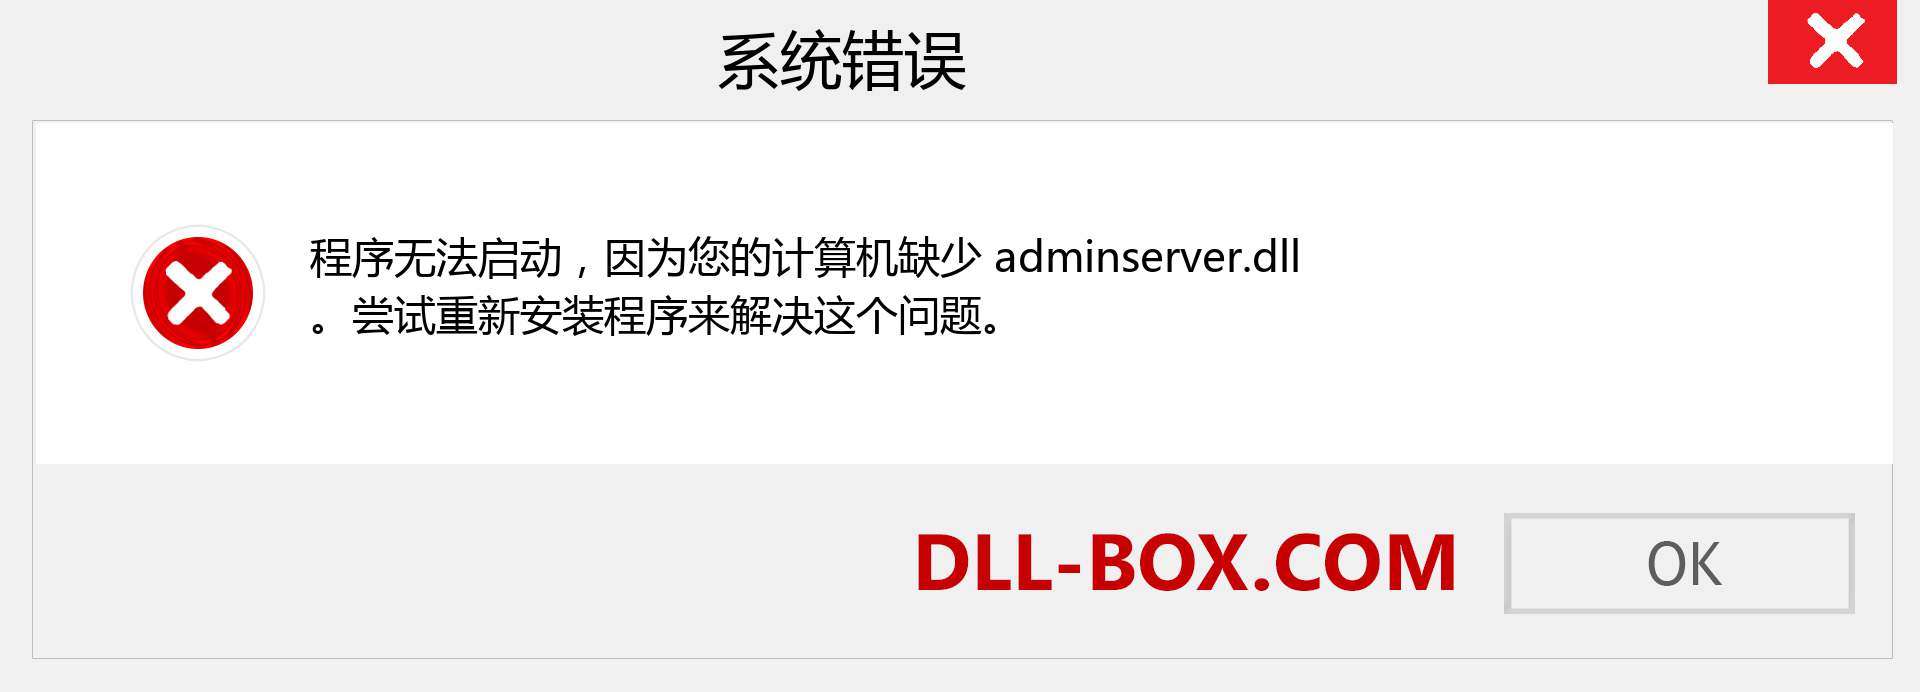 adminserver.dll 文件丢失？。 适用于 Windows 7、8、10 的下载 - 修复 Windows、照片、图像上的 adminserver dll 丢失错误